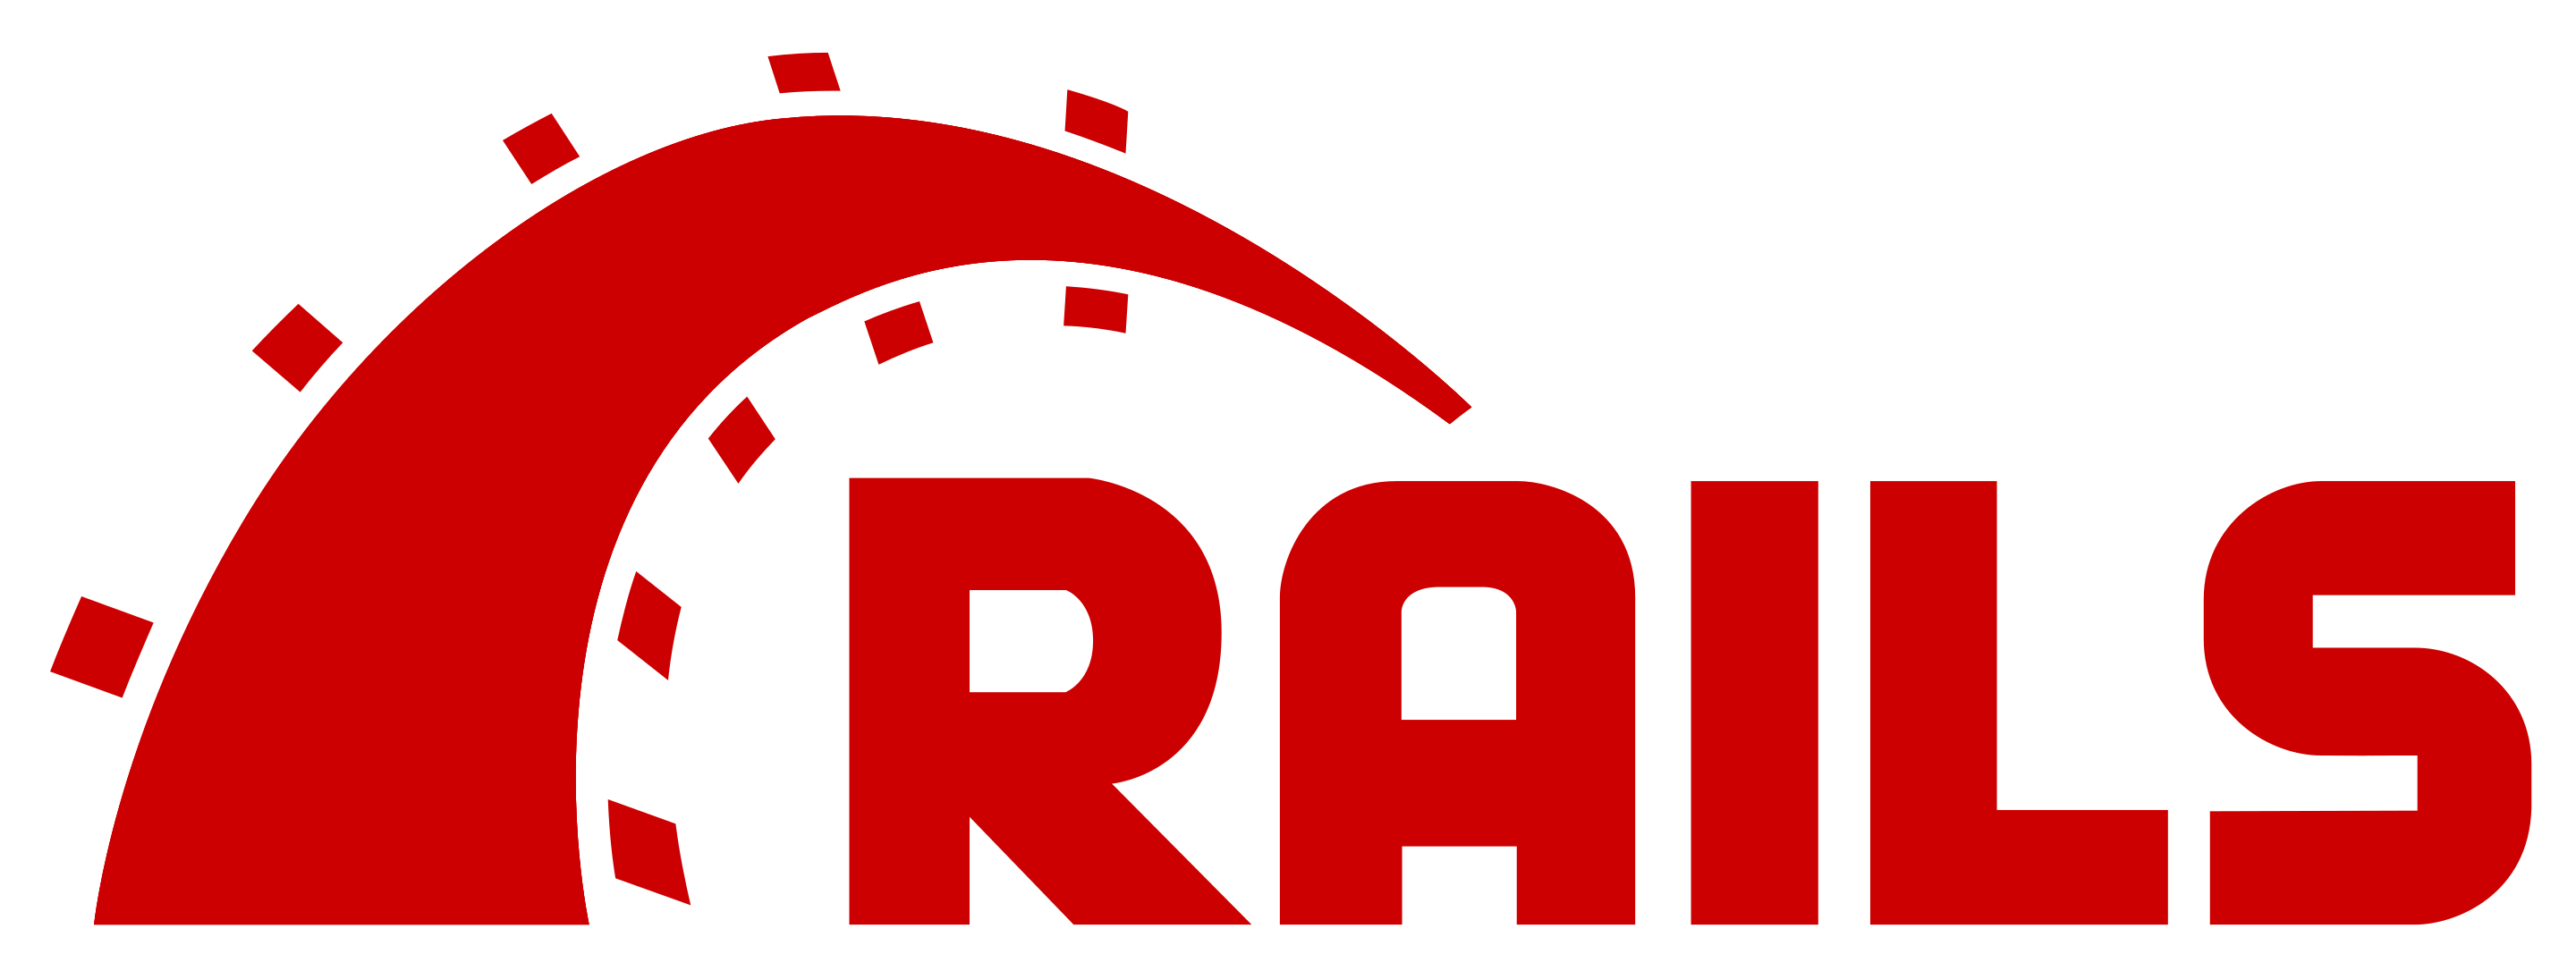 Ruby on Rails (ROR) Software Development | Galliot